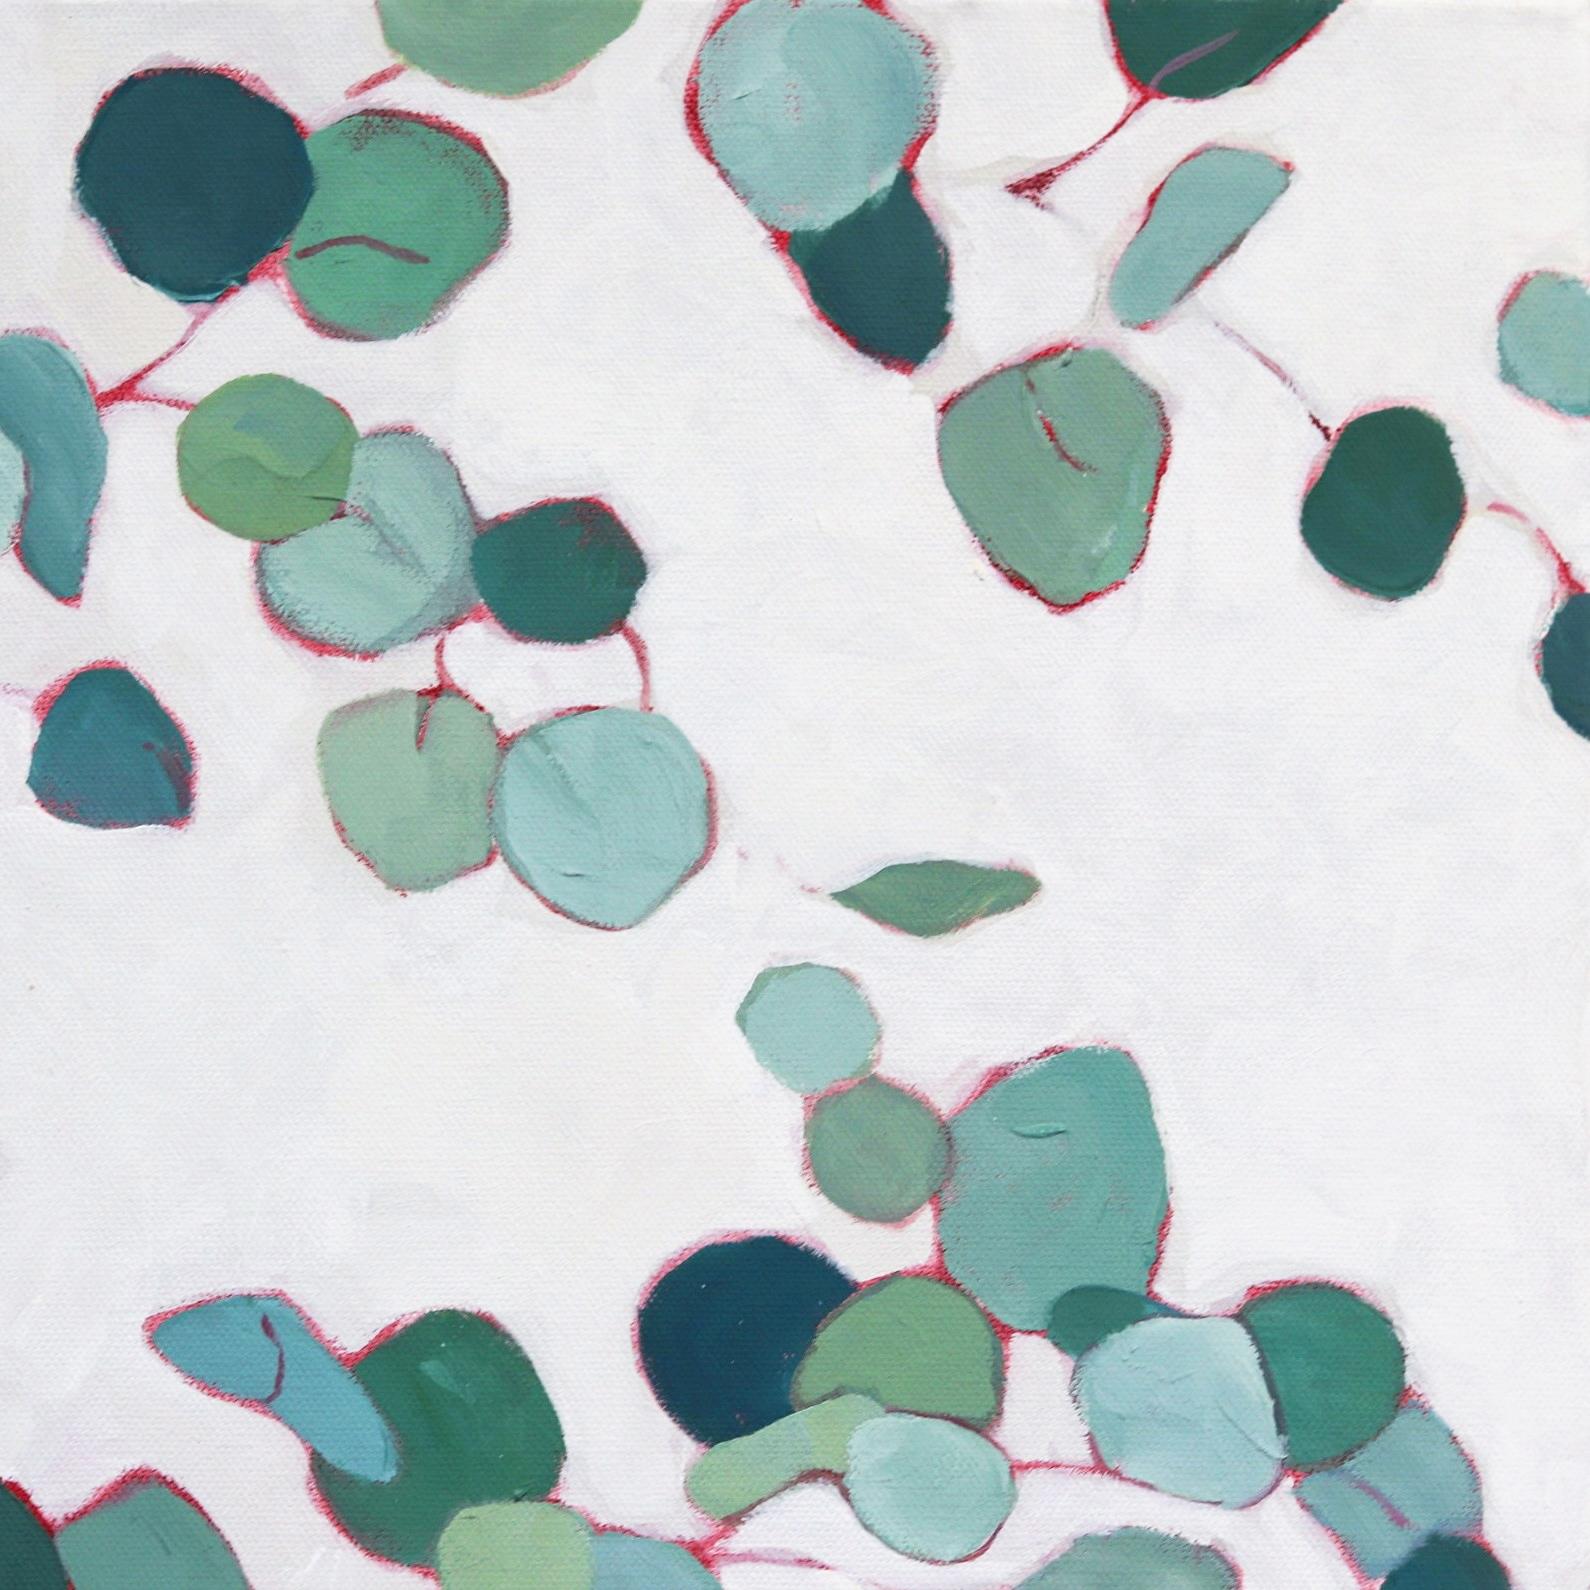 Eucalyptus Study - Abstract Mixed Media Art by Beth Munro